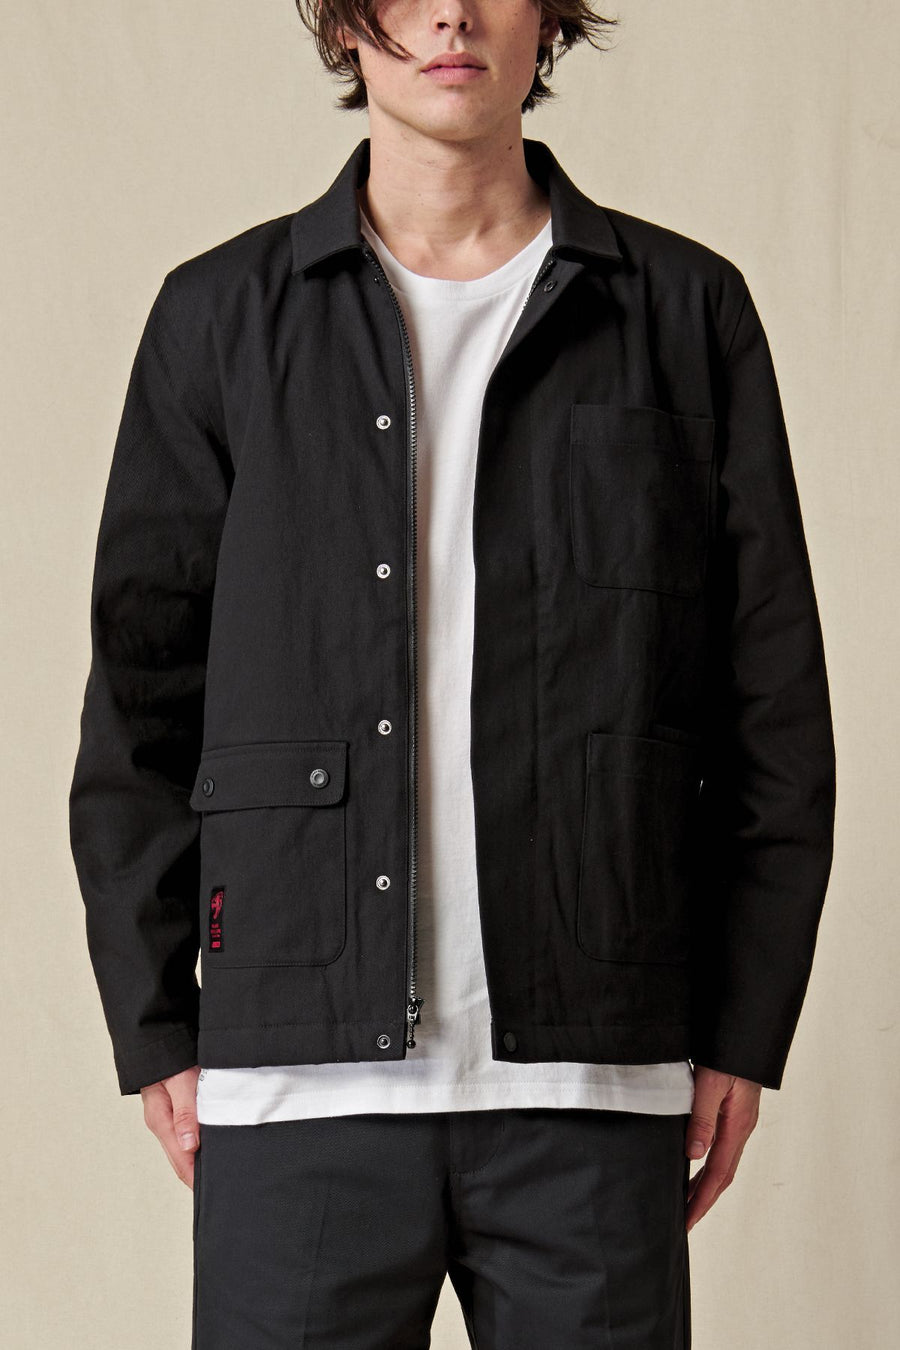 Globe Dion Agius Worker Jacket Black - [ka(:)rısma] showroom & concept store